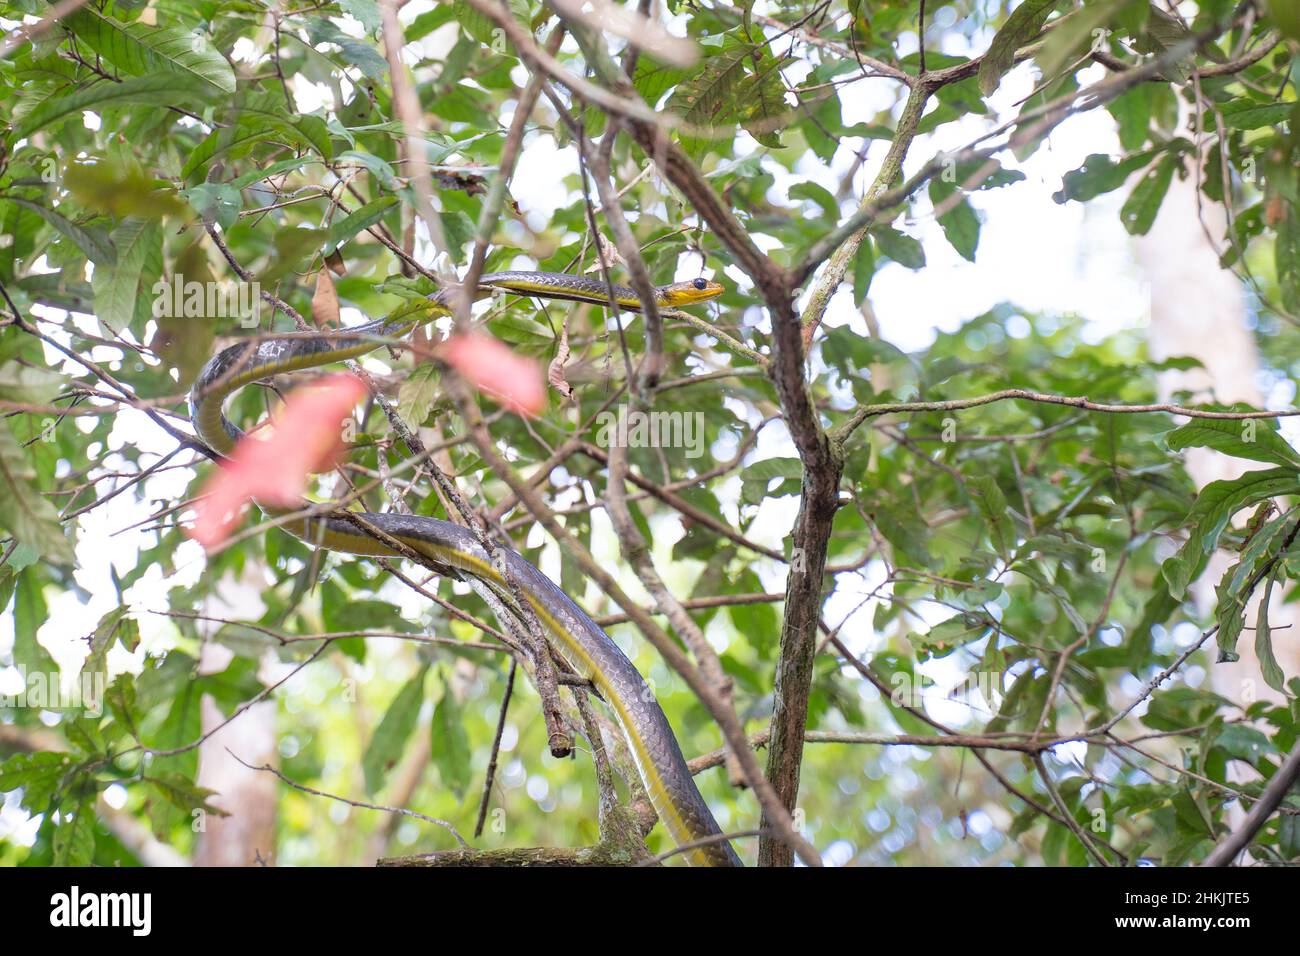 A arboreal snake in a tree, next Sacambu Reserve, Amazon, Peru. Stock Photo